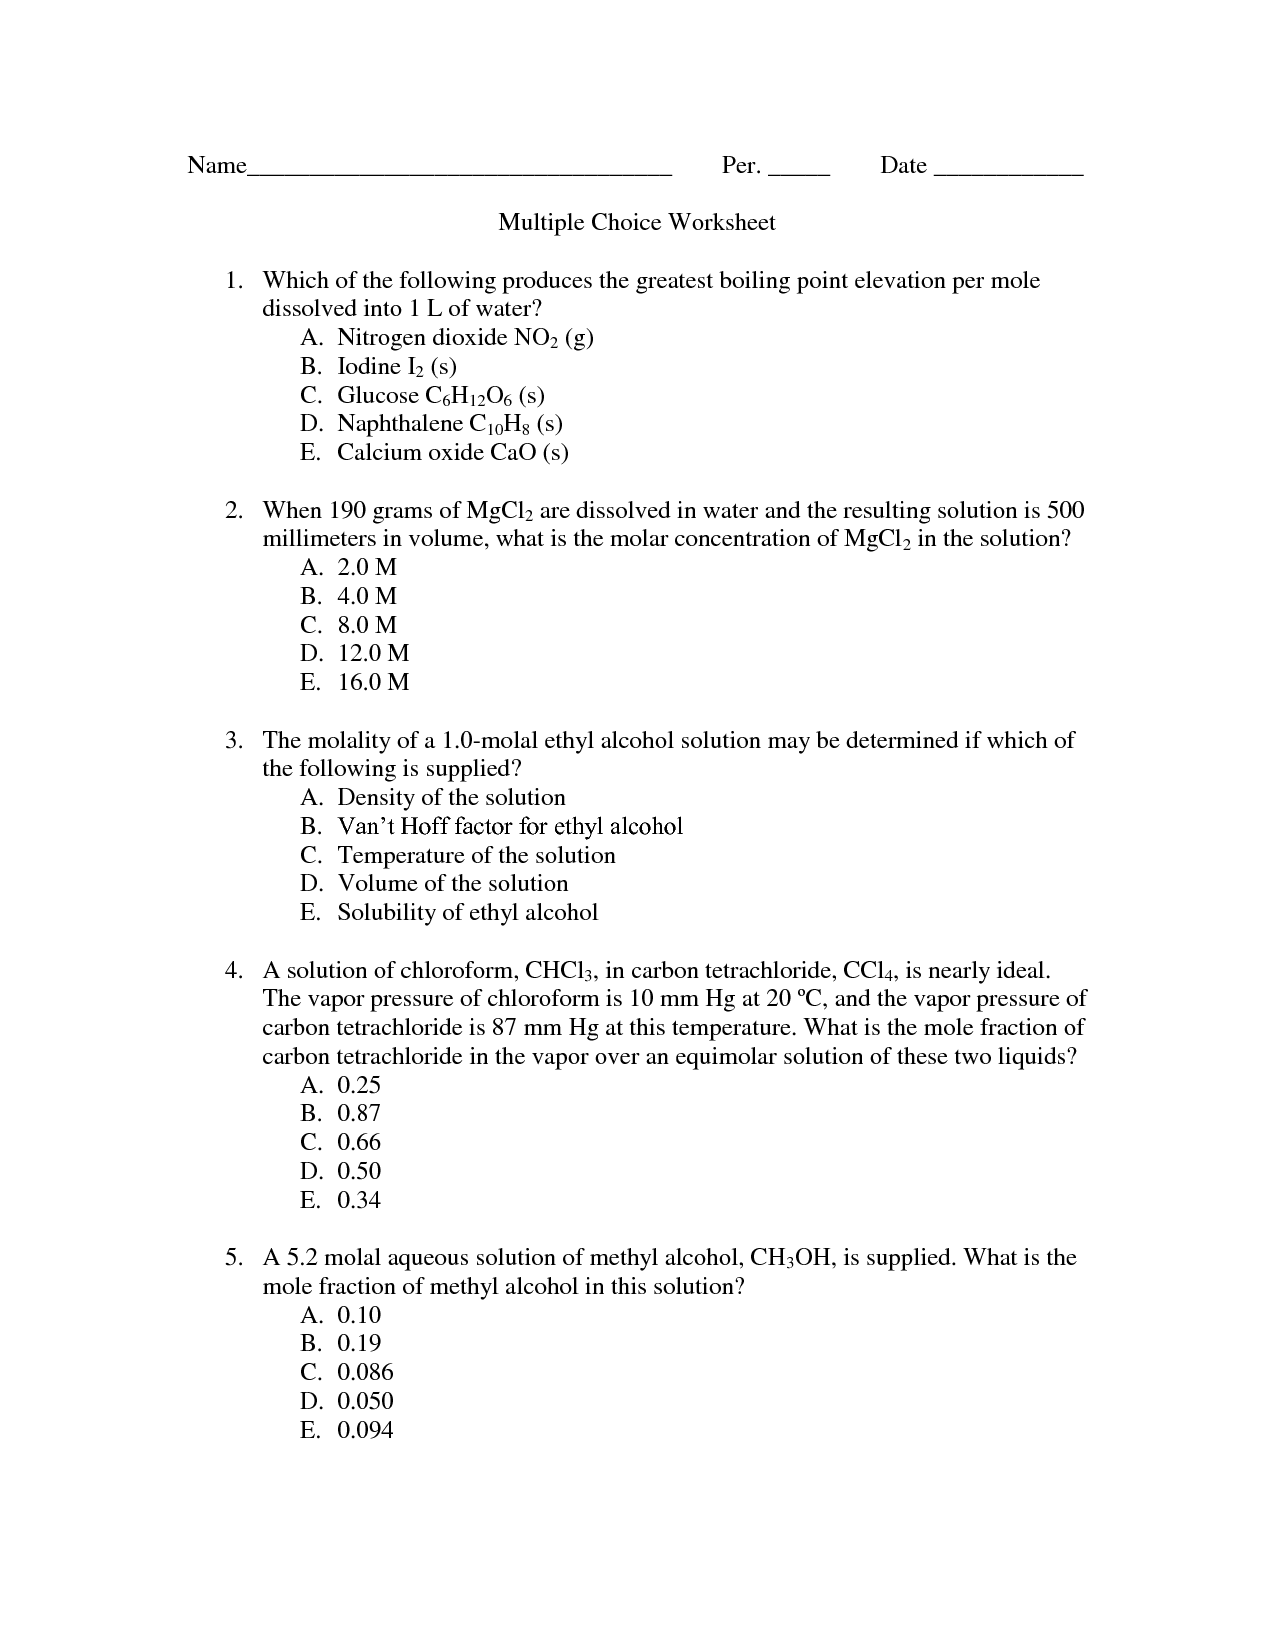 theme-worksheets-multiple-choice-pdf